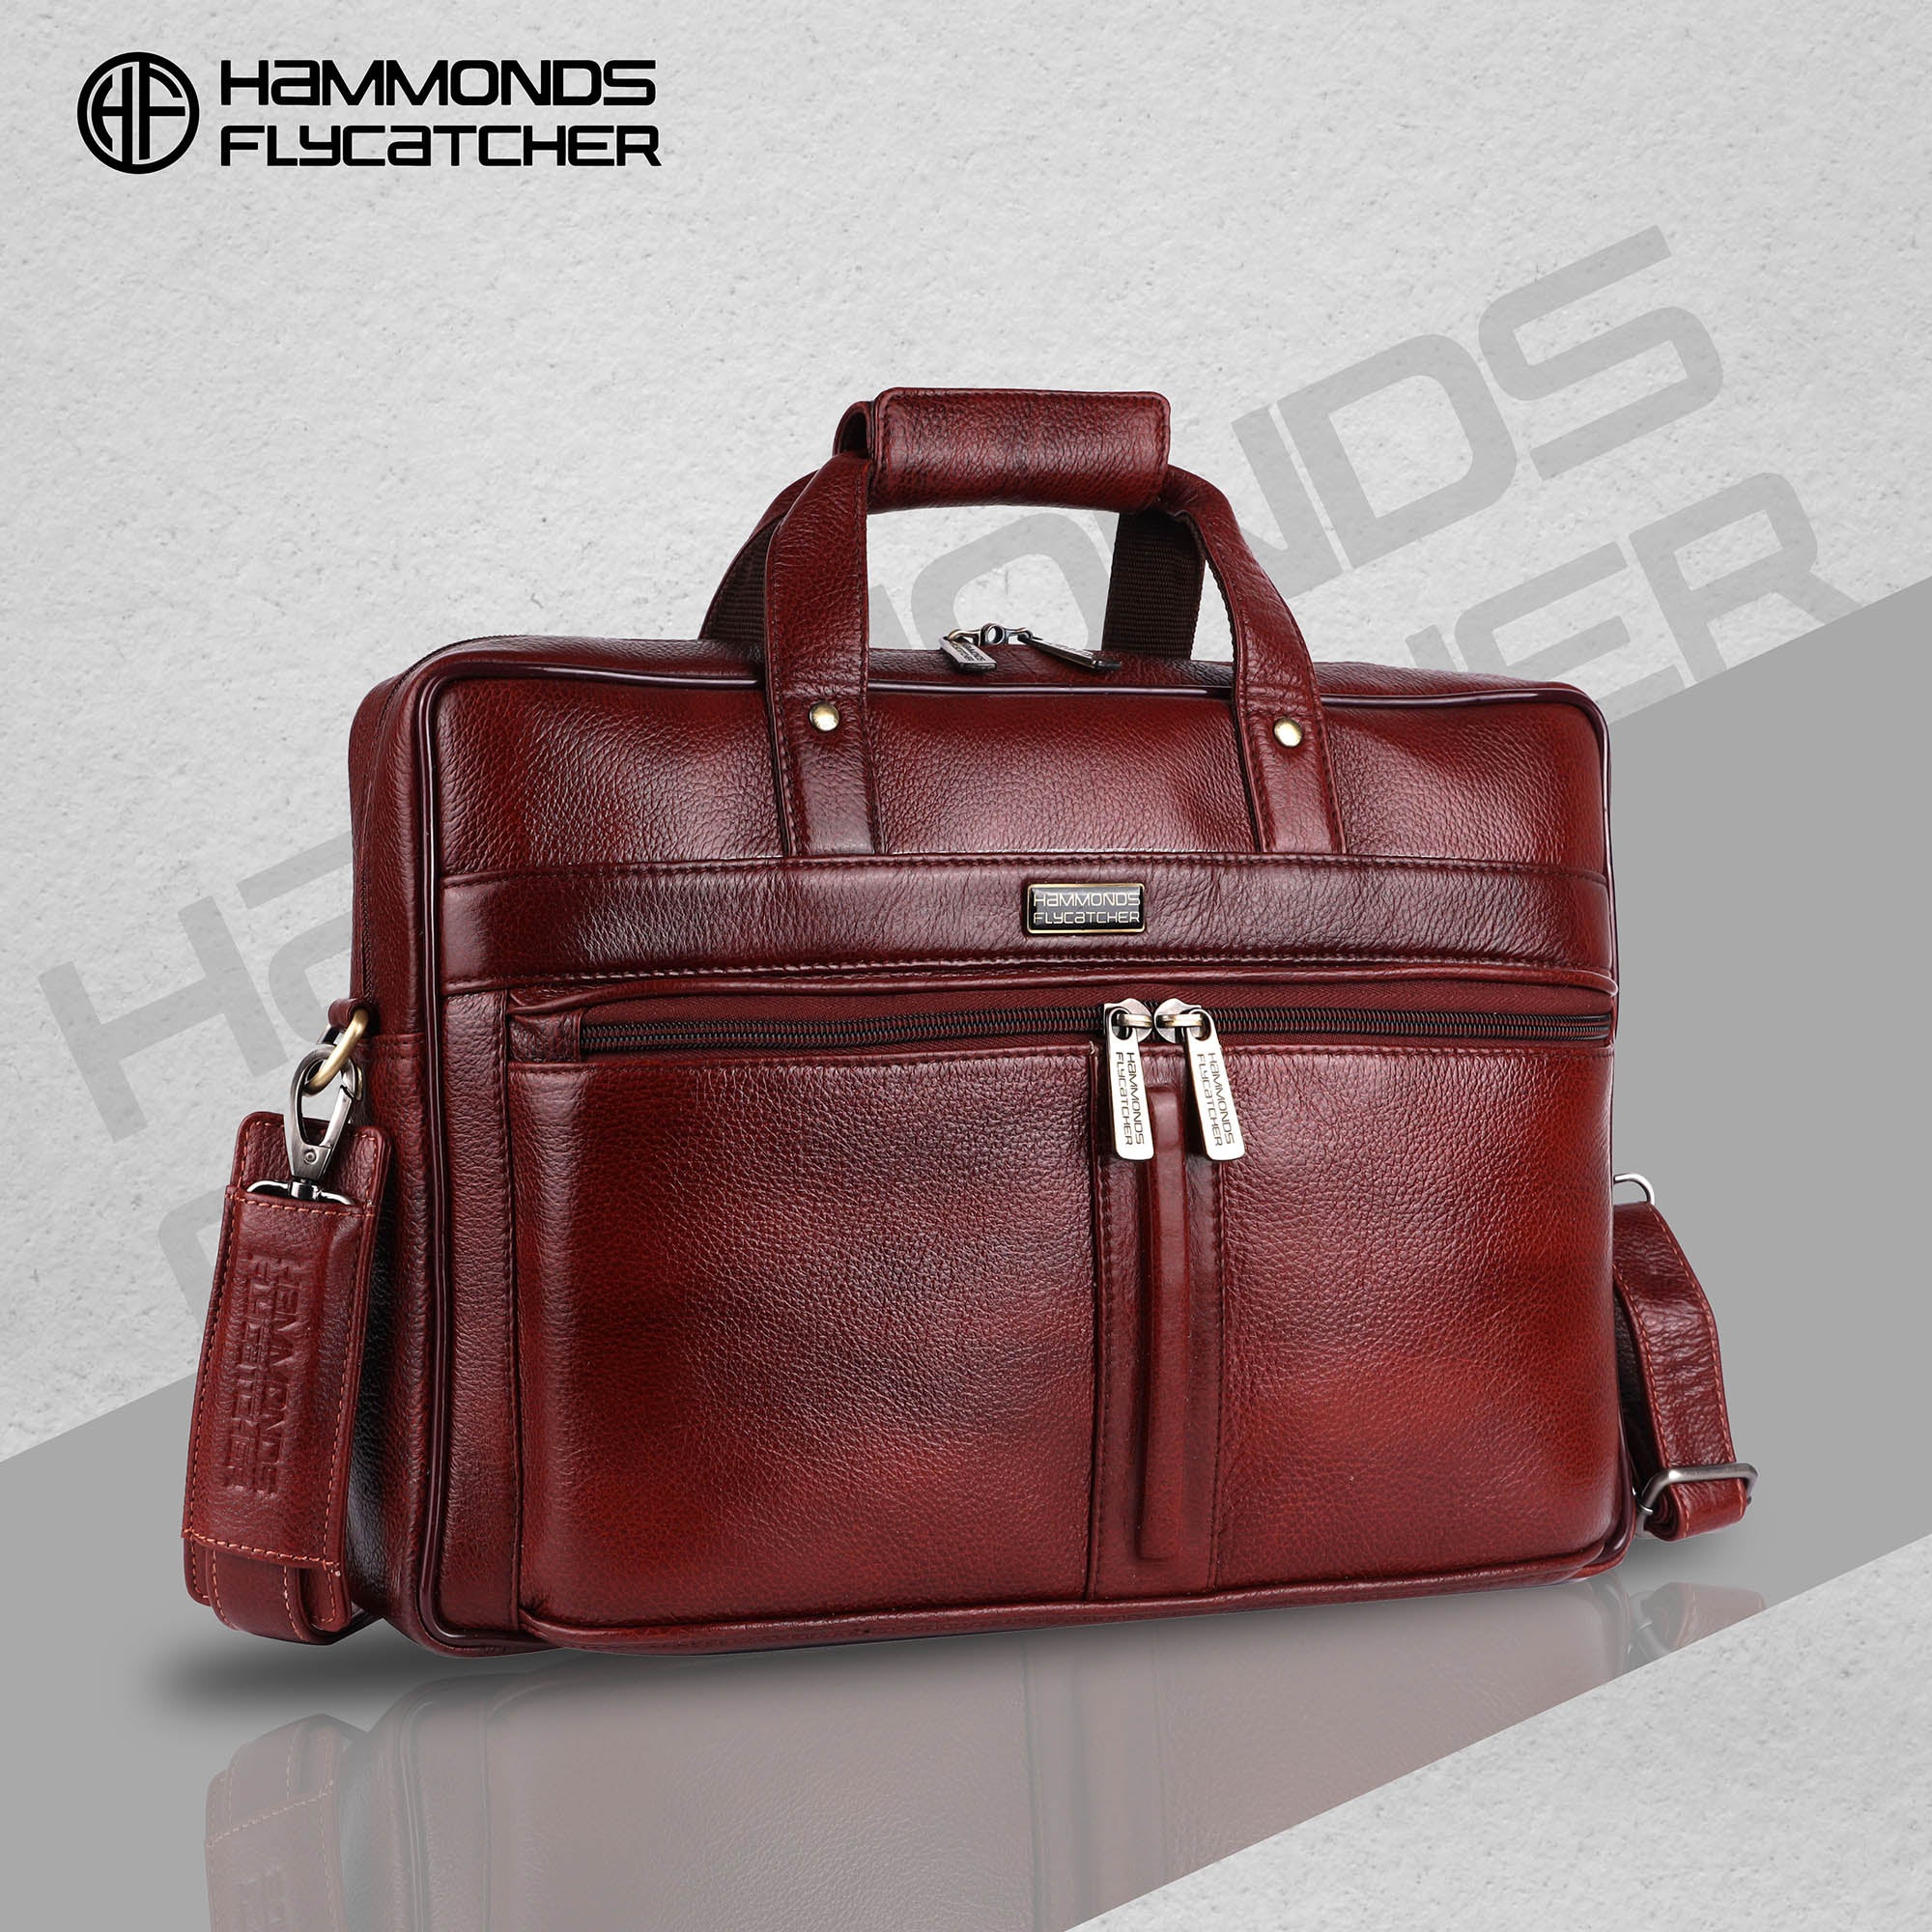 Genuine Leather Office Bag for Men - Laptop Bag - Fits Upto 16 Inch Laptop/MacBook - 1 Year Warranty